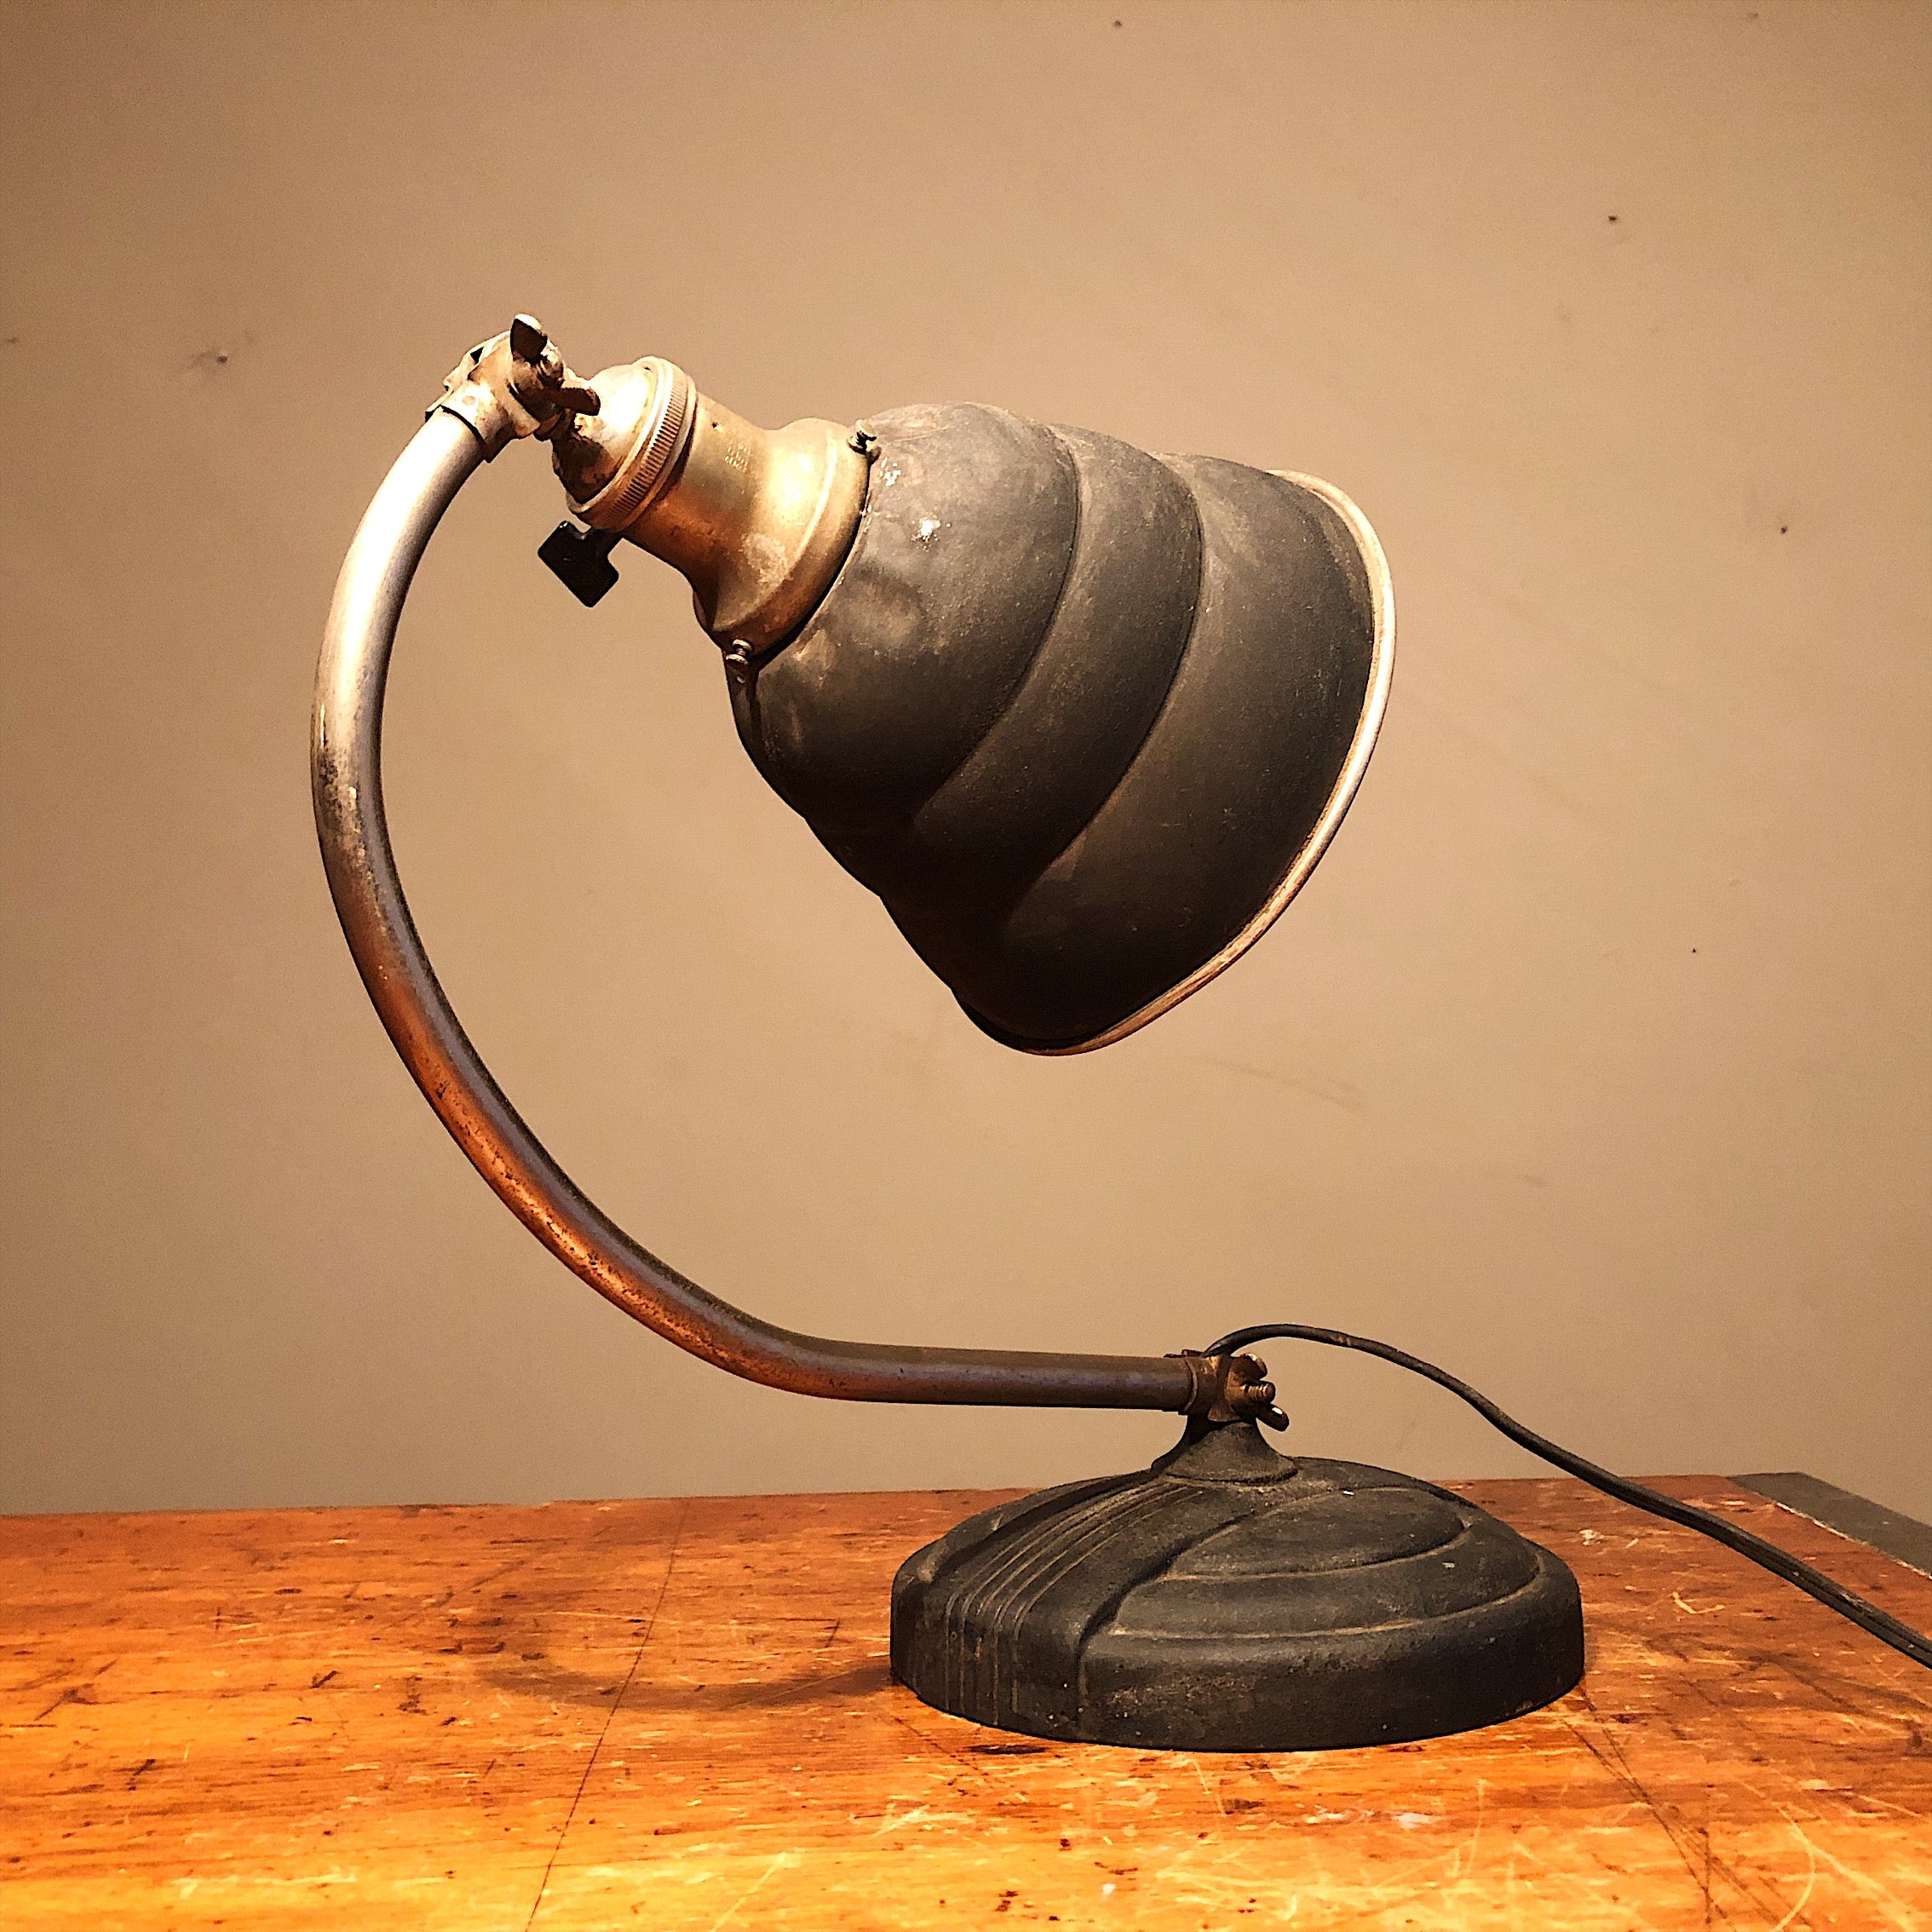 Vintage Industrial Articulating Desk Lamp - General Electric - Rare Art Deco Light - Decor - Unusual Weird